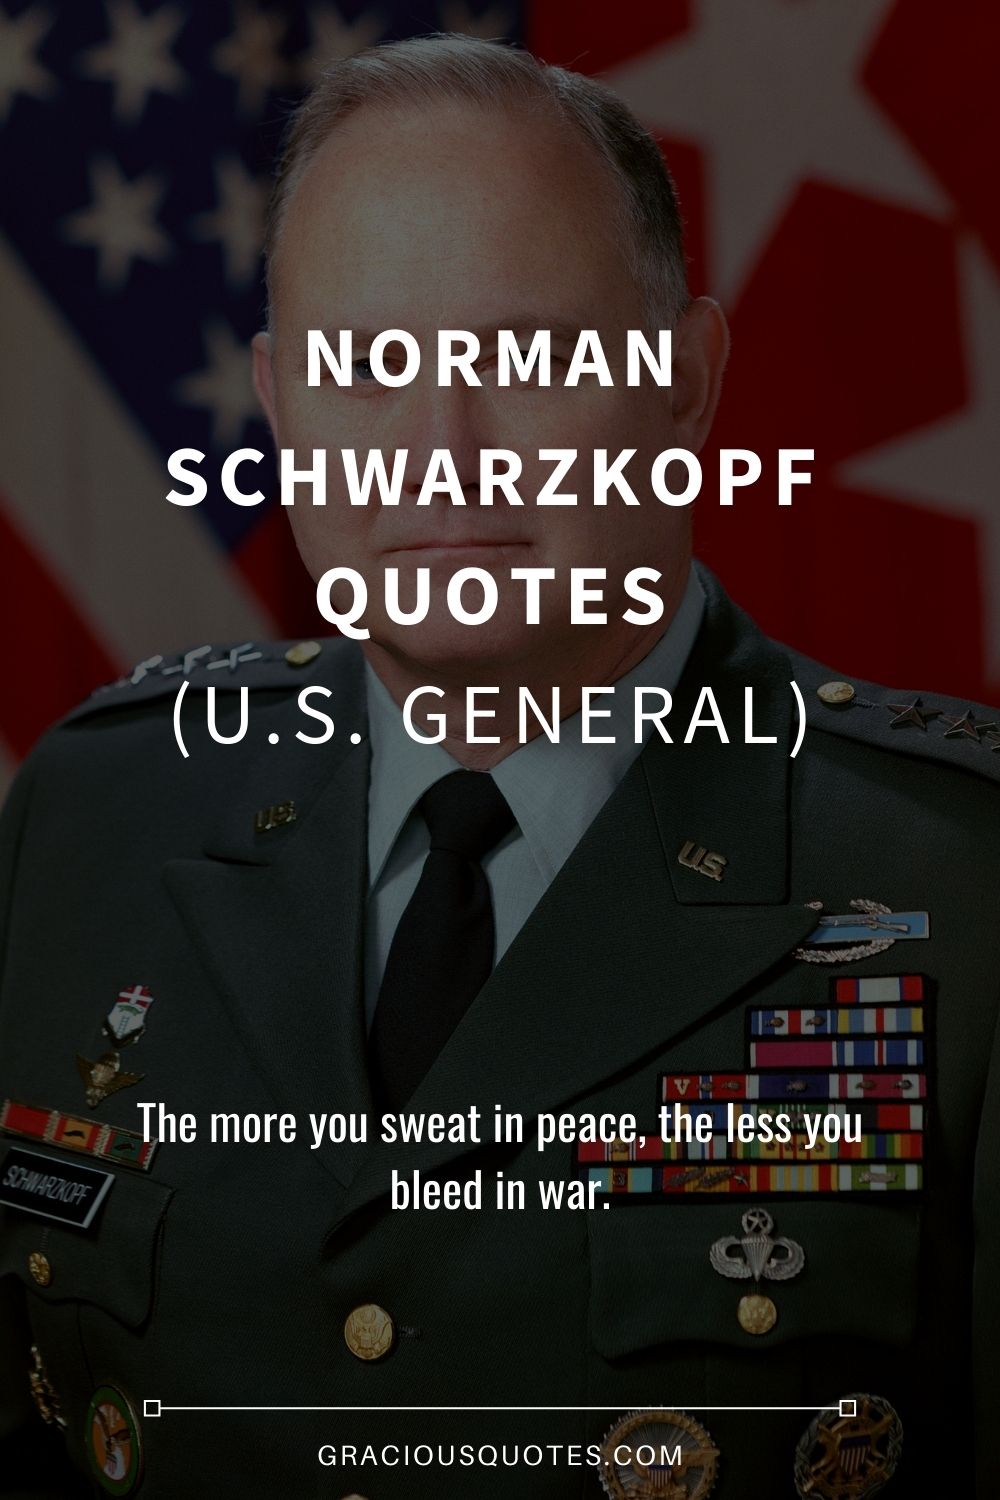 Norman Schwarzkopf Quotes (U.S. GENERAL) - Gracious Quotes